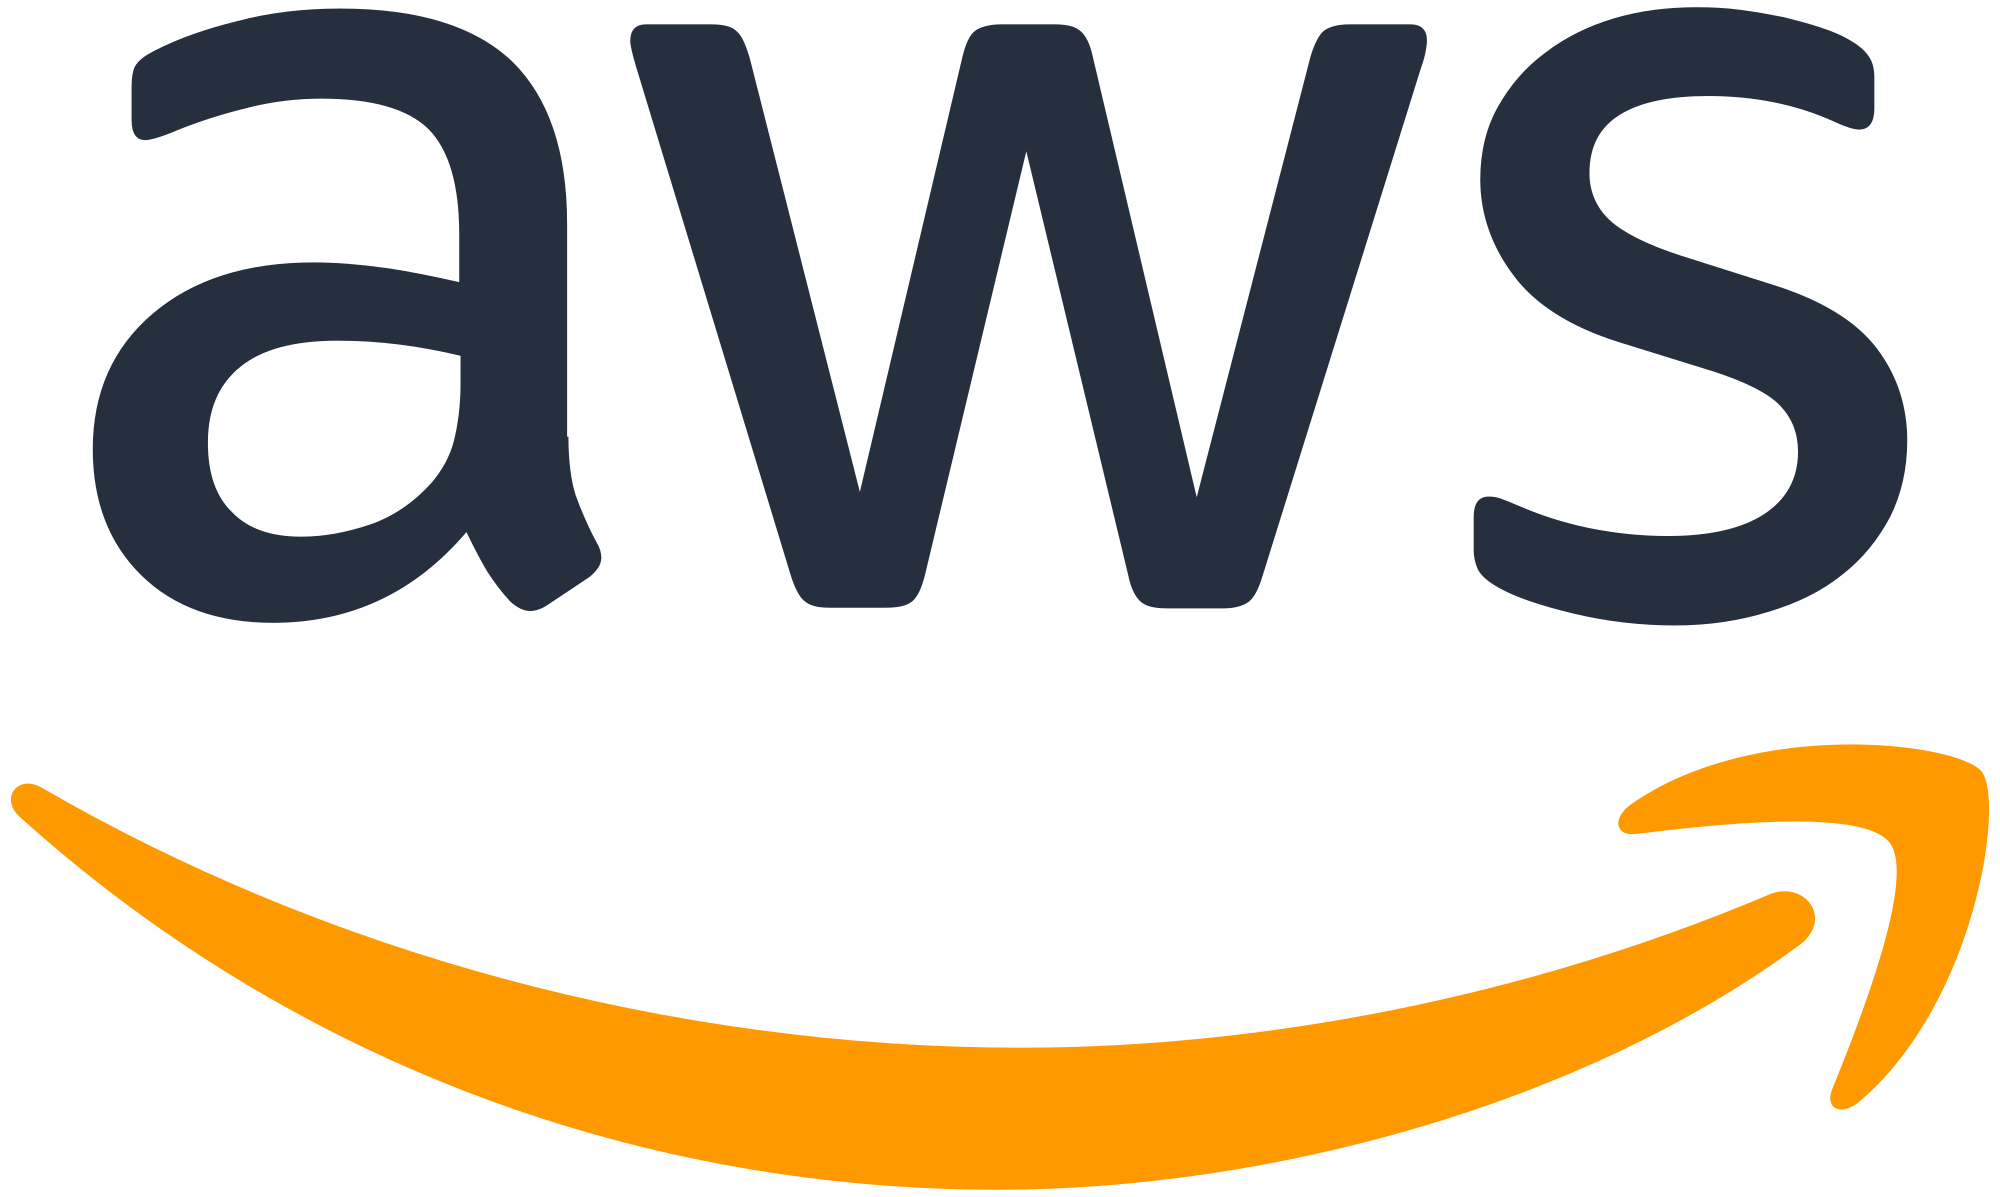 Amazon Web Services - AWS